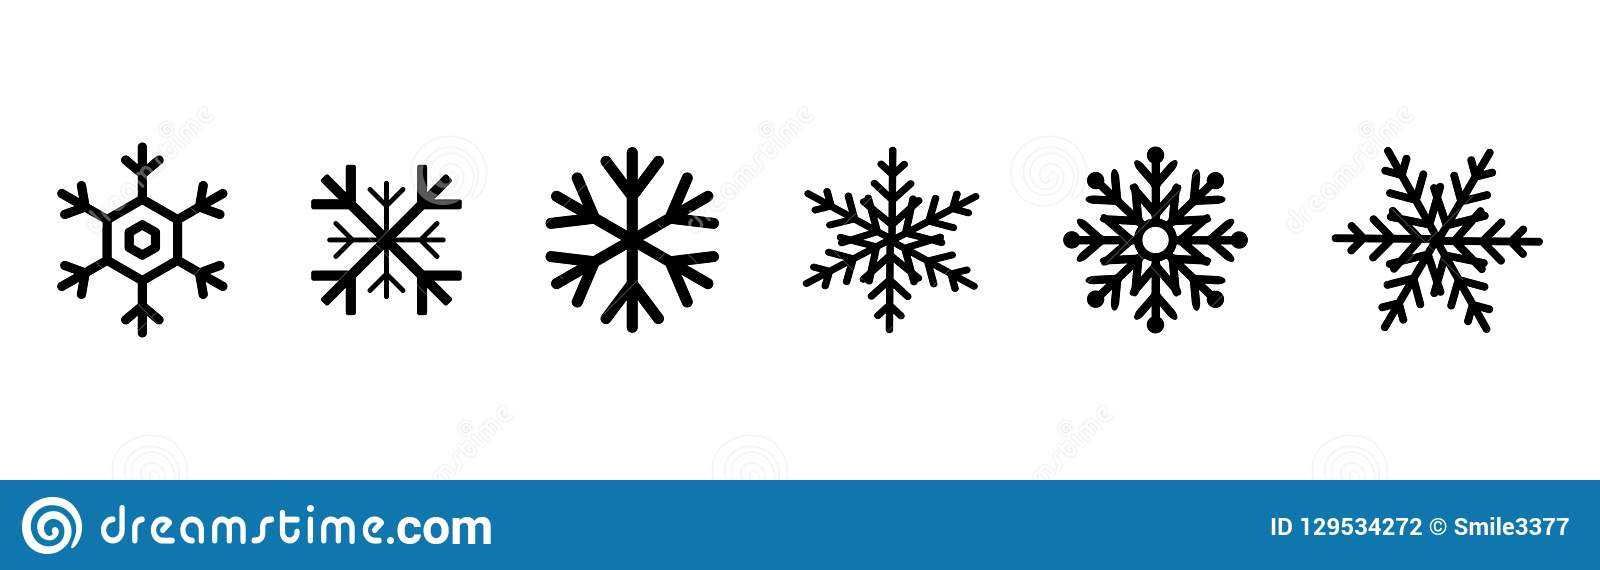 Set Of Black Snowflakes Icons. Black Snowflake. Snowflakes In Blank Snowflake Template